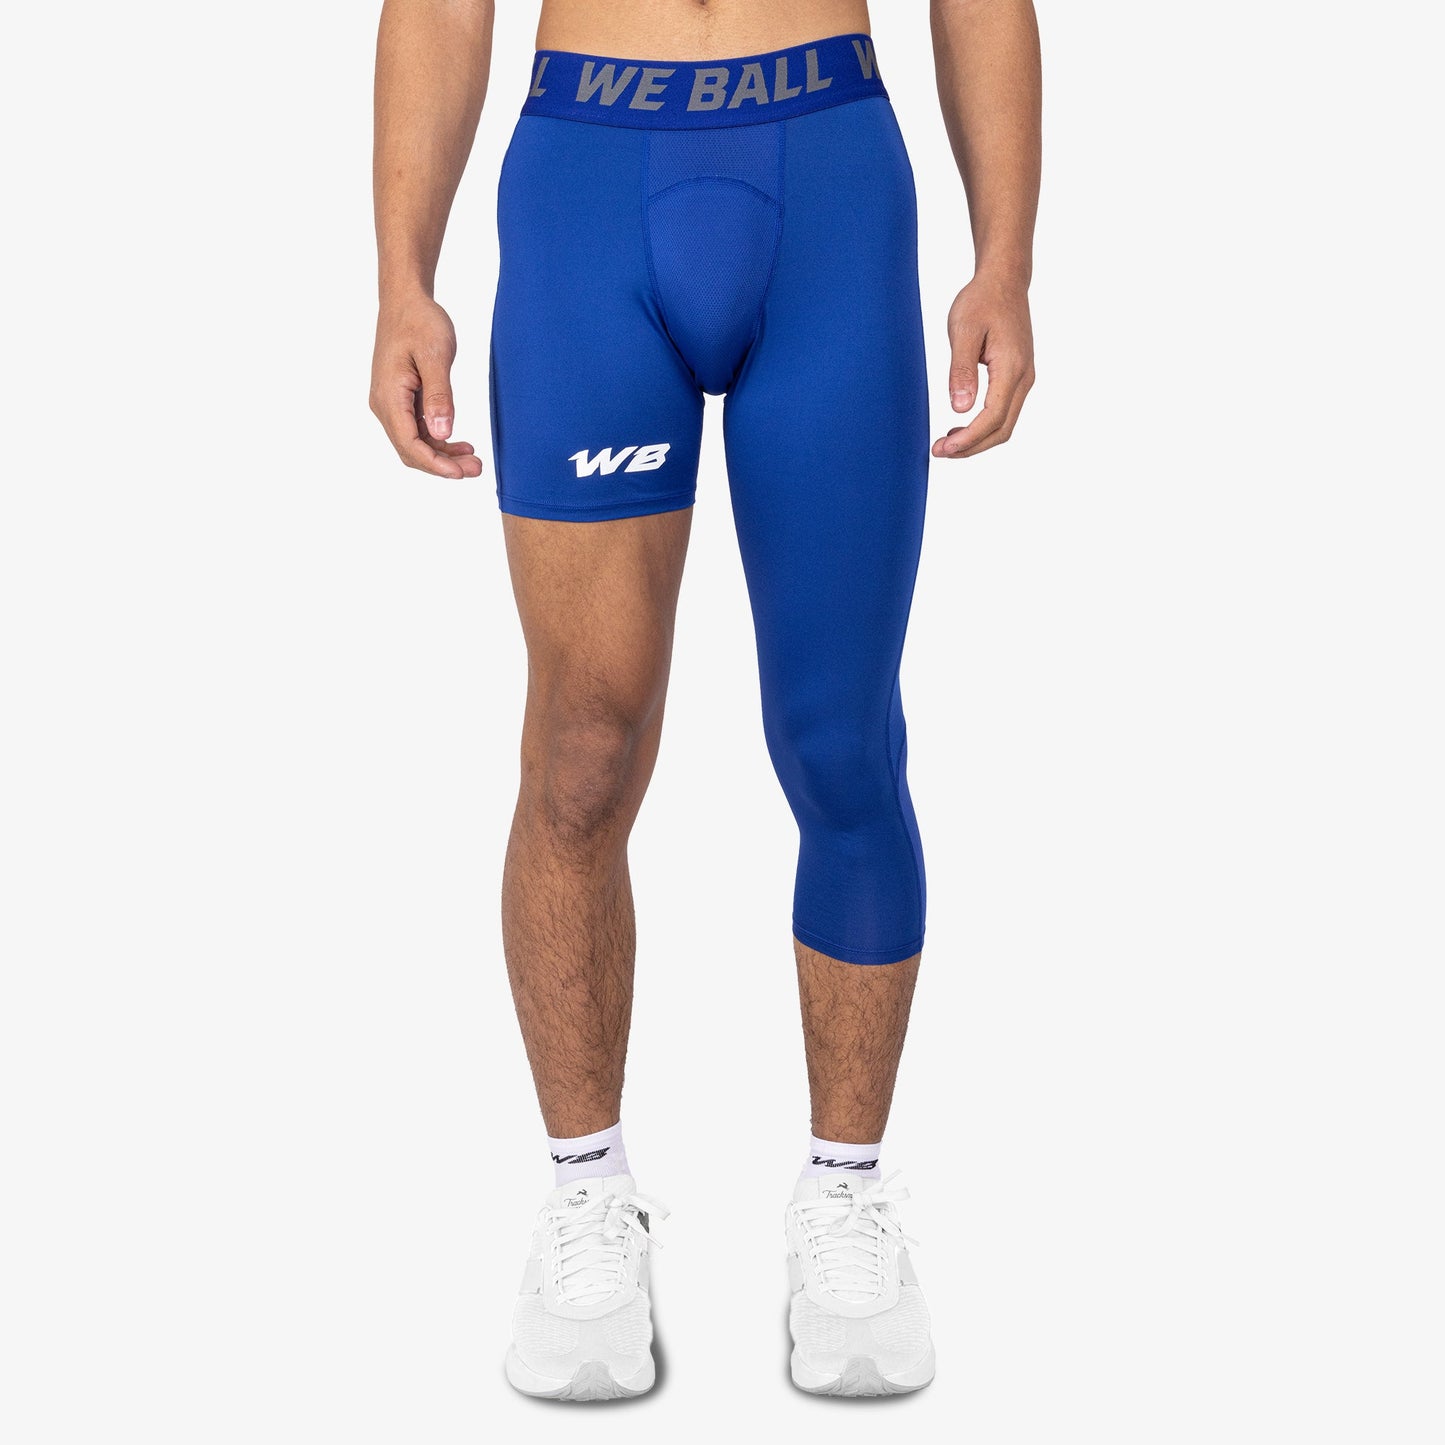 ISO LEG WBTECH™ 3/4 TIGHTS (BLUE) - We Ball Sports